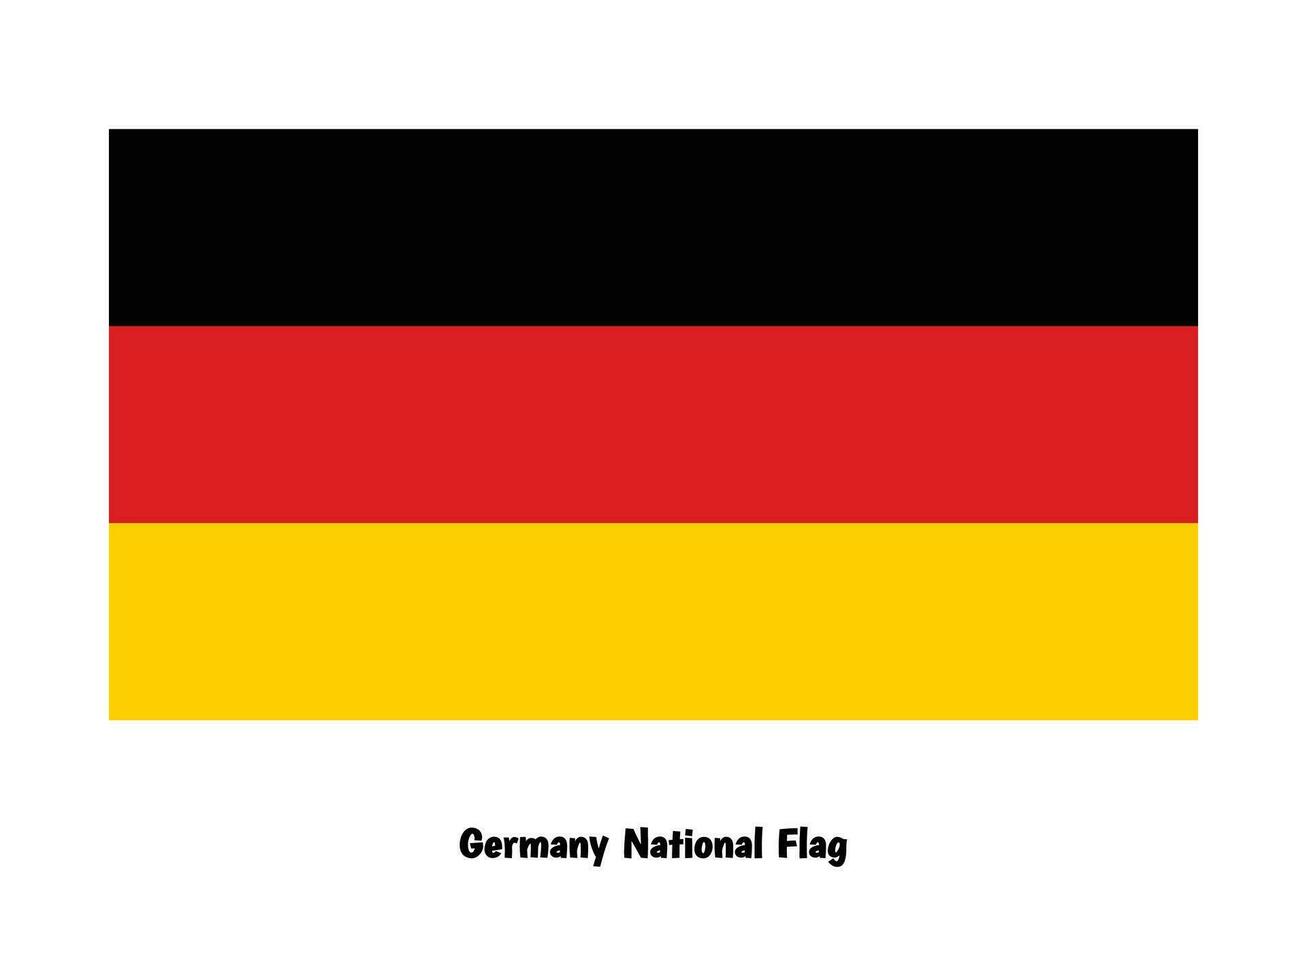 Germany National flag vector illustration